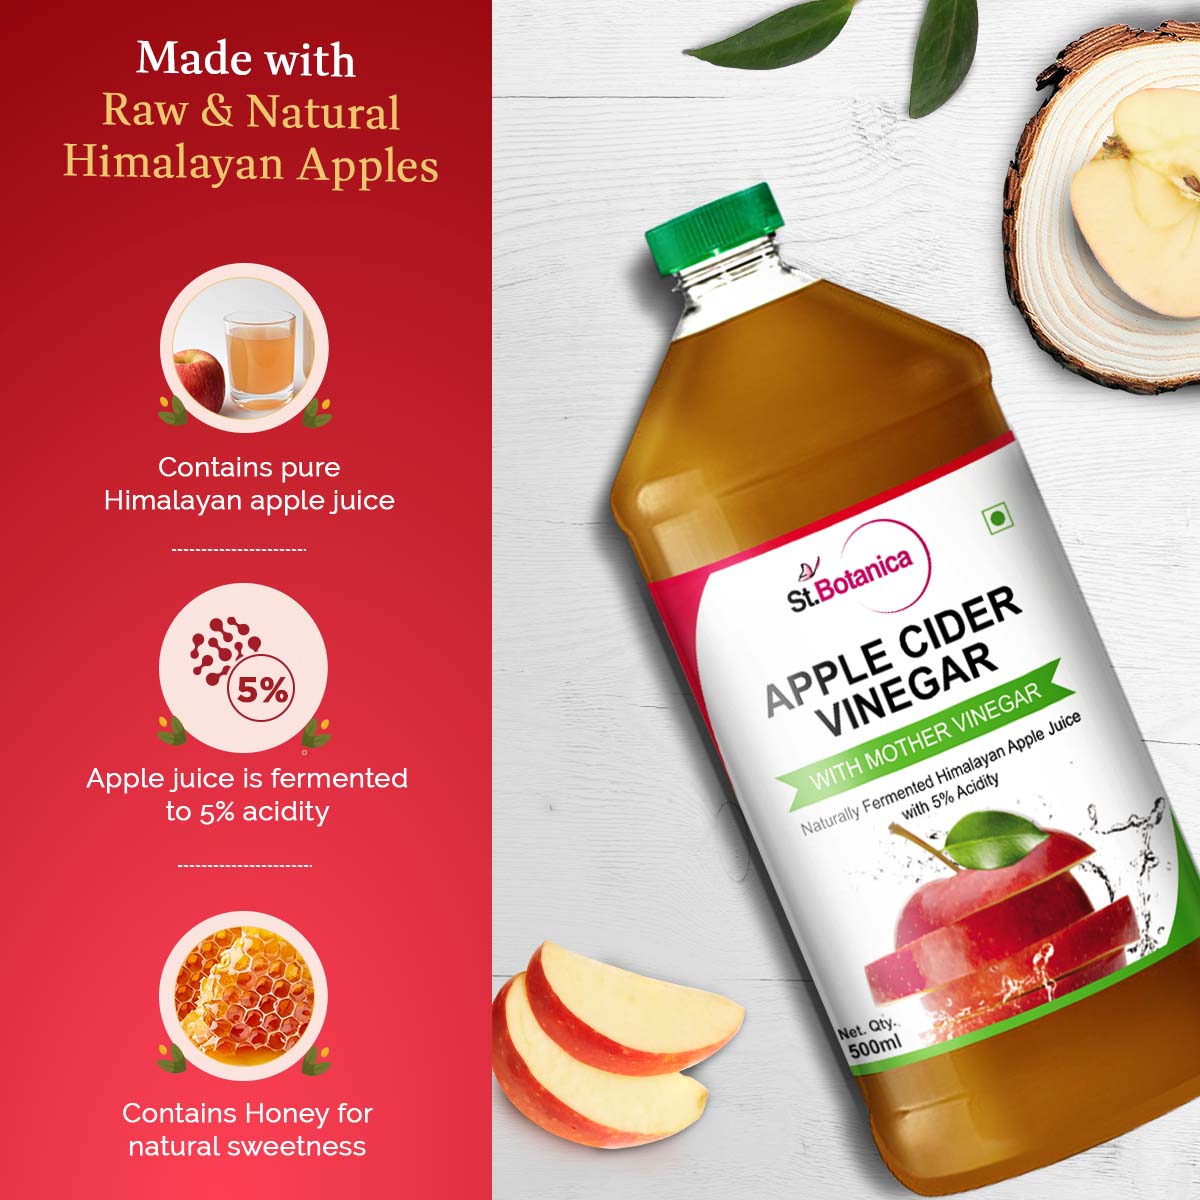 St.Botanica Natural Apple Cider Vinegar with Mother Vinegar - 500 ml - Raw, Unfiltered, UnRefined